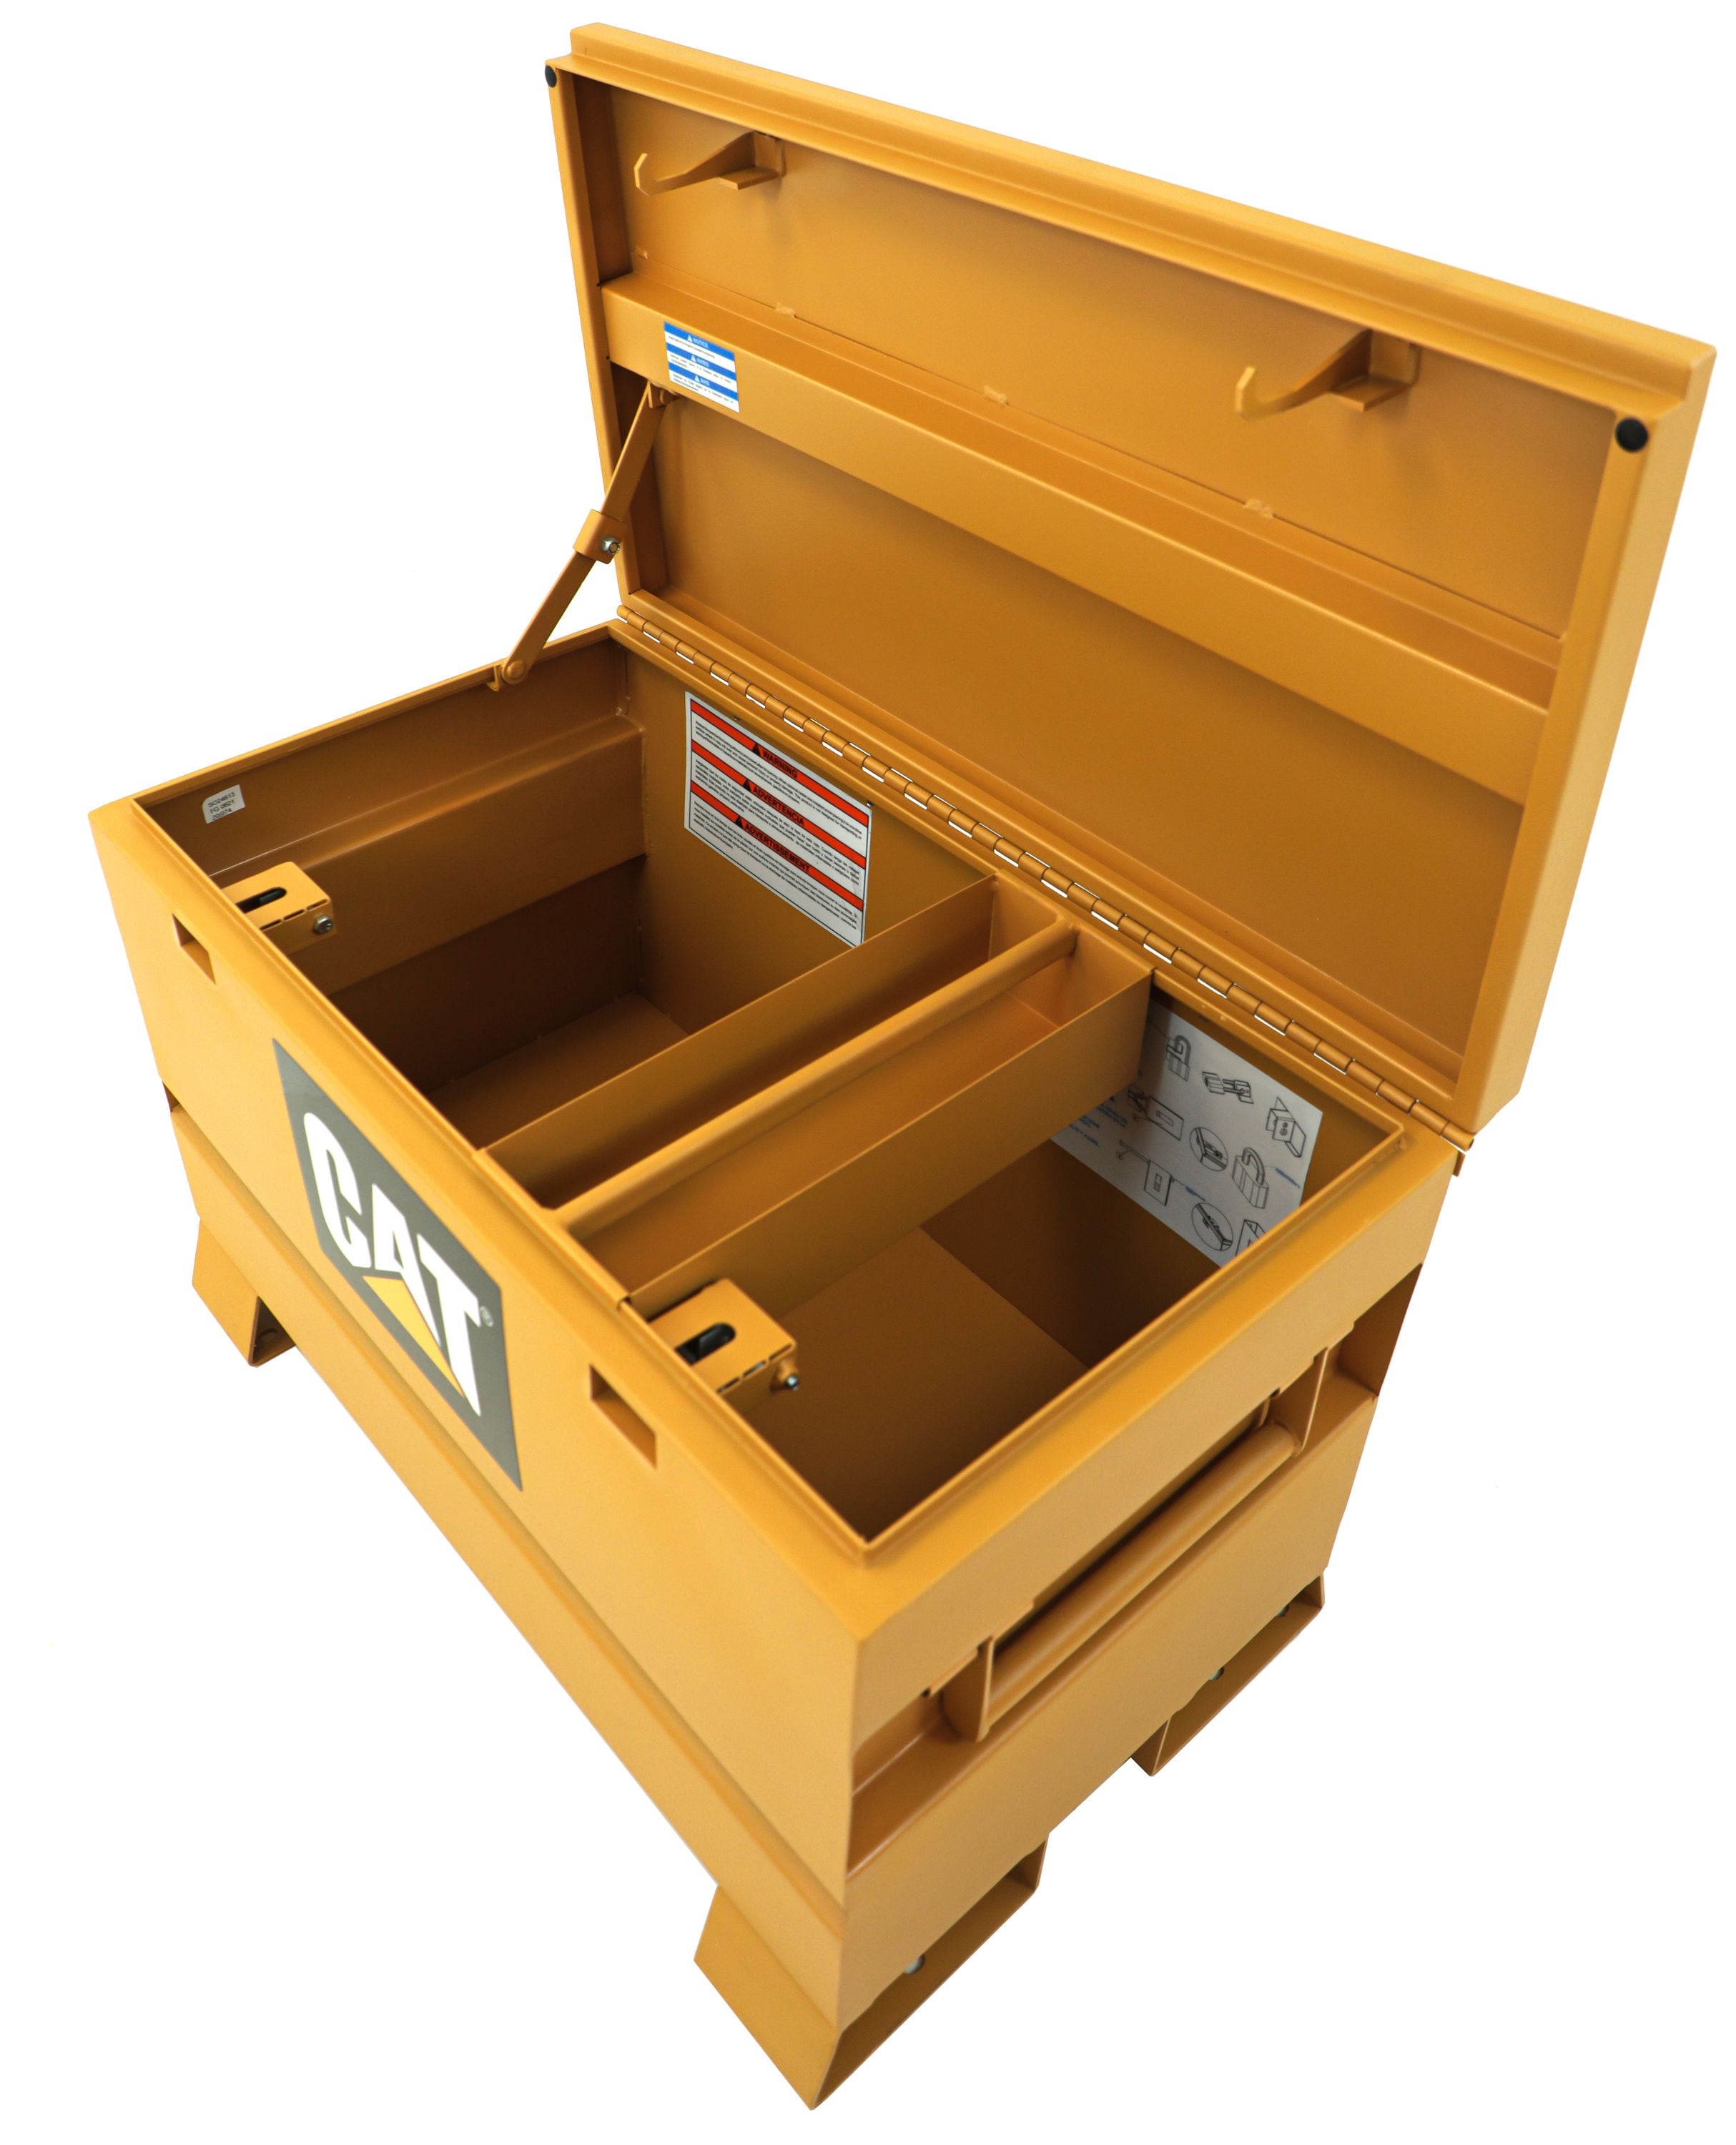 Worksite Tool Box, Tool Storage, Steel Tool Box